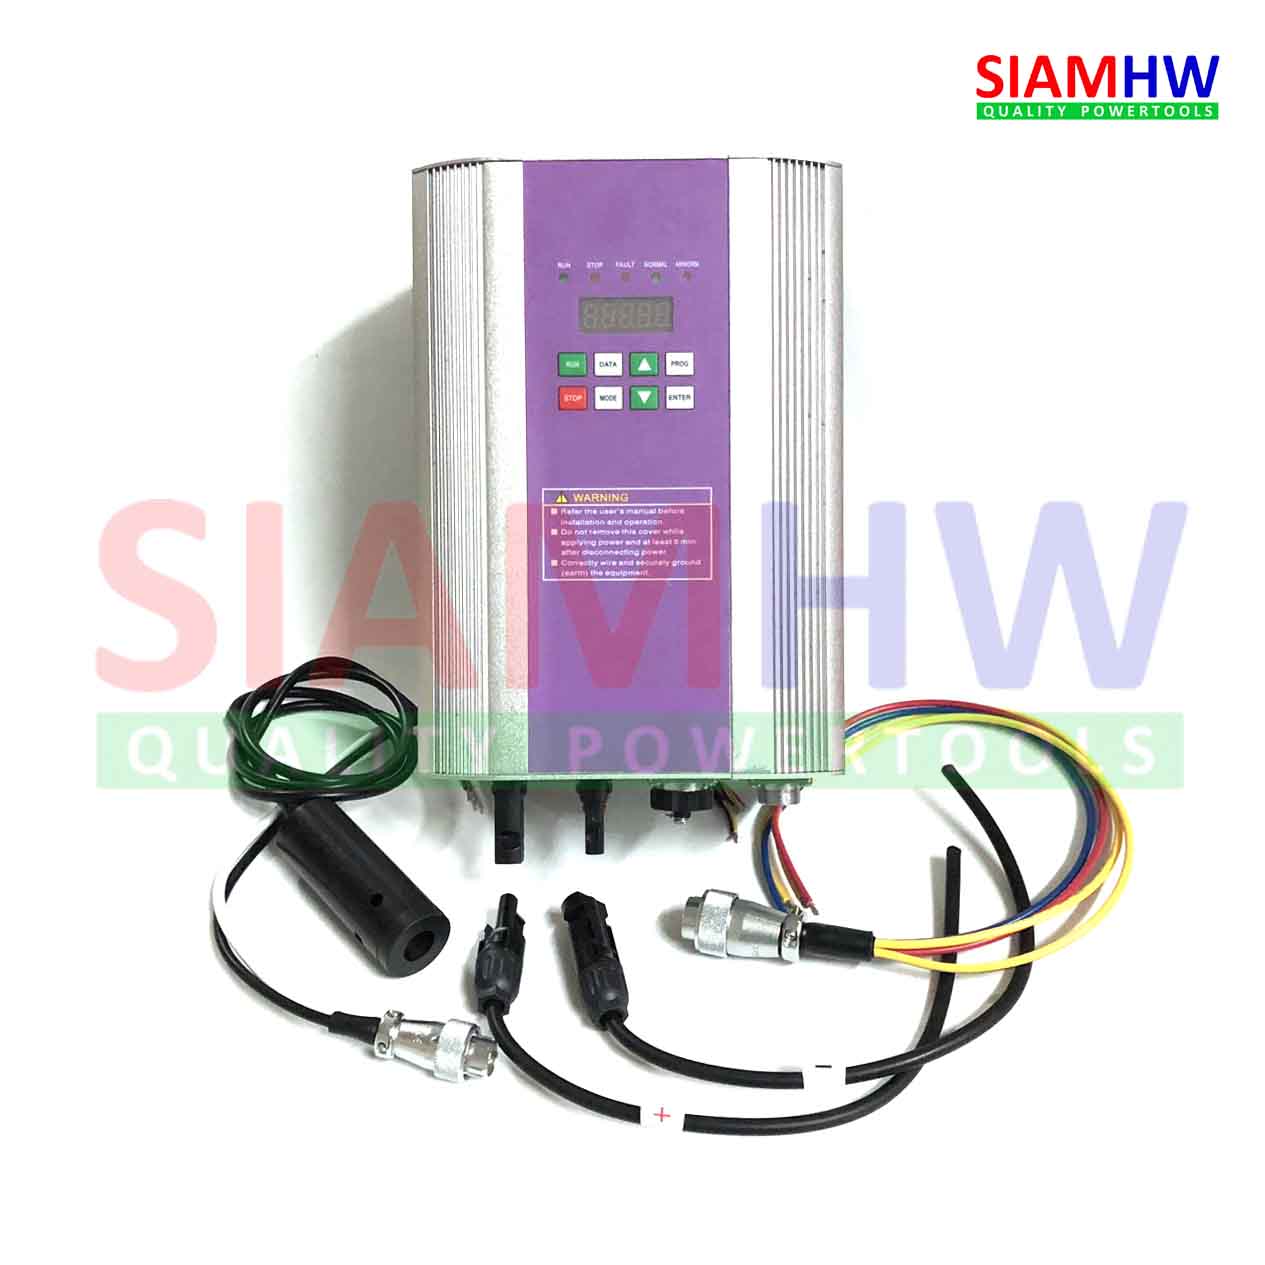 SIAMHW PB2200L โซล่าร์ อินเวอร์เตอร์ ใช้กับปั๊มไฟฟ้า 1-3 แรงม้า Max2200W (Solar Pumping Inverter)